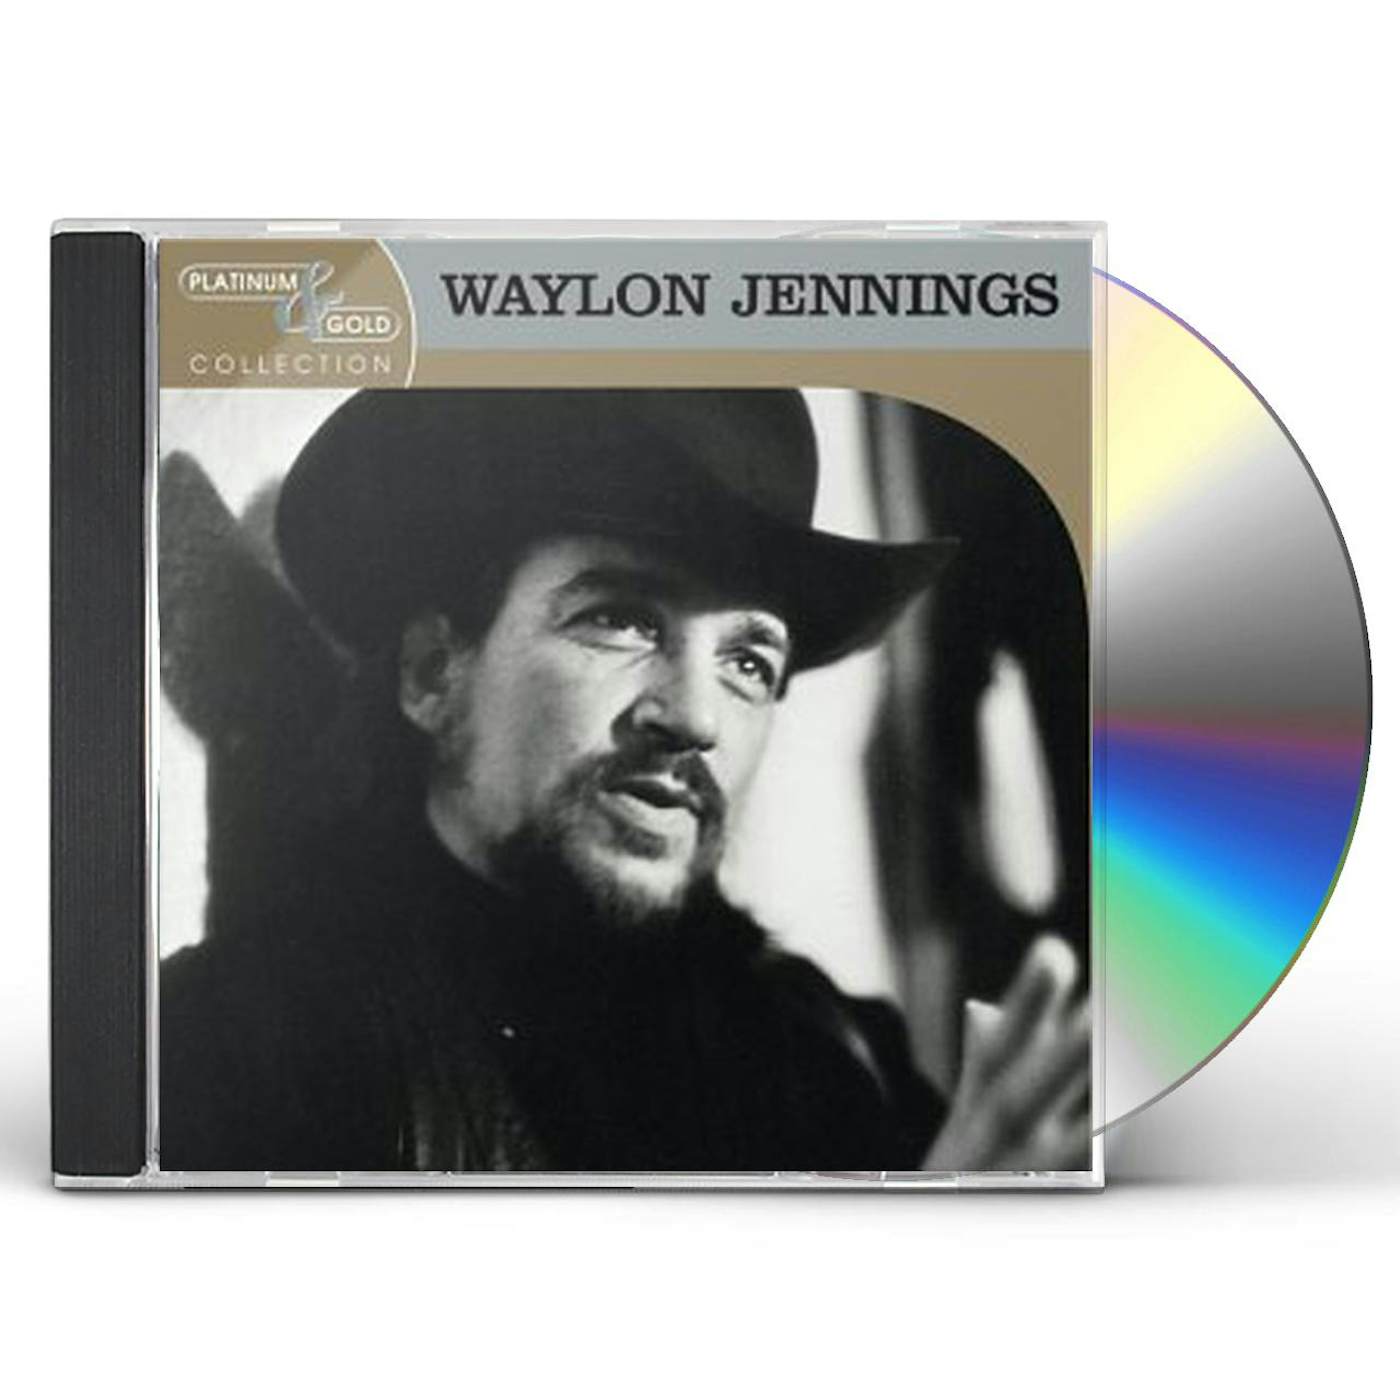 Waylon Jennings PLATINUM & GOLD COLLECTION CD